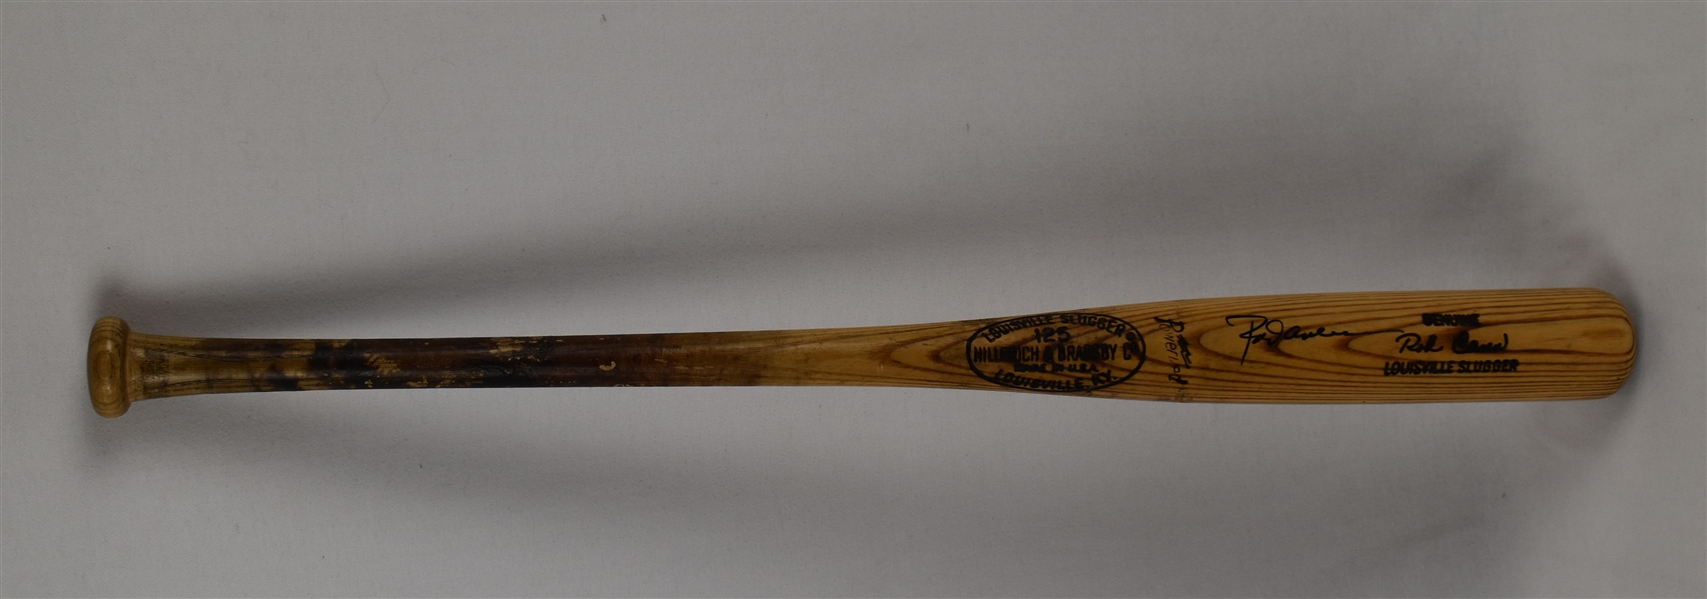 Rod Carew 1969-72 Game Used & Autographed Bat Graded PSA/DNA 8